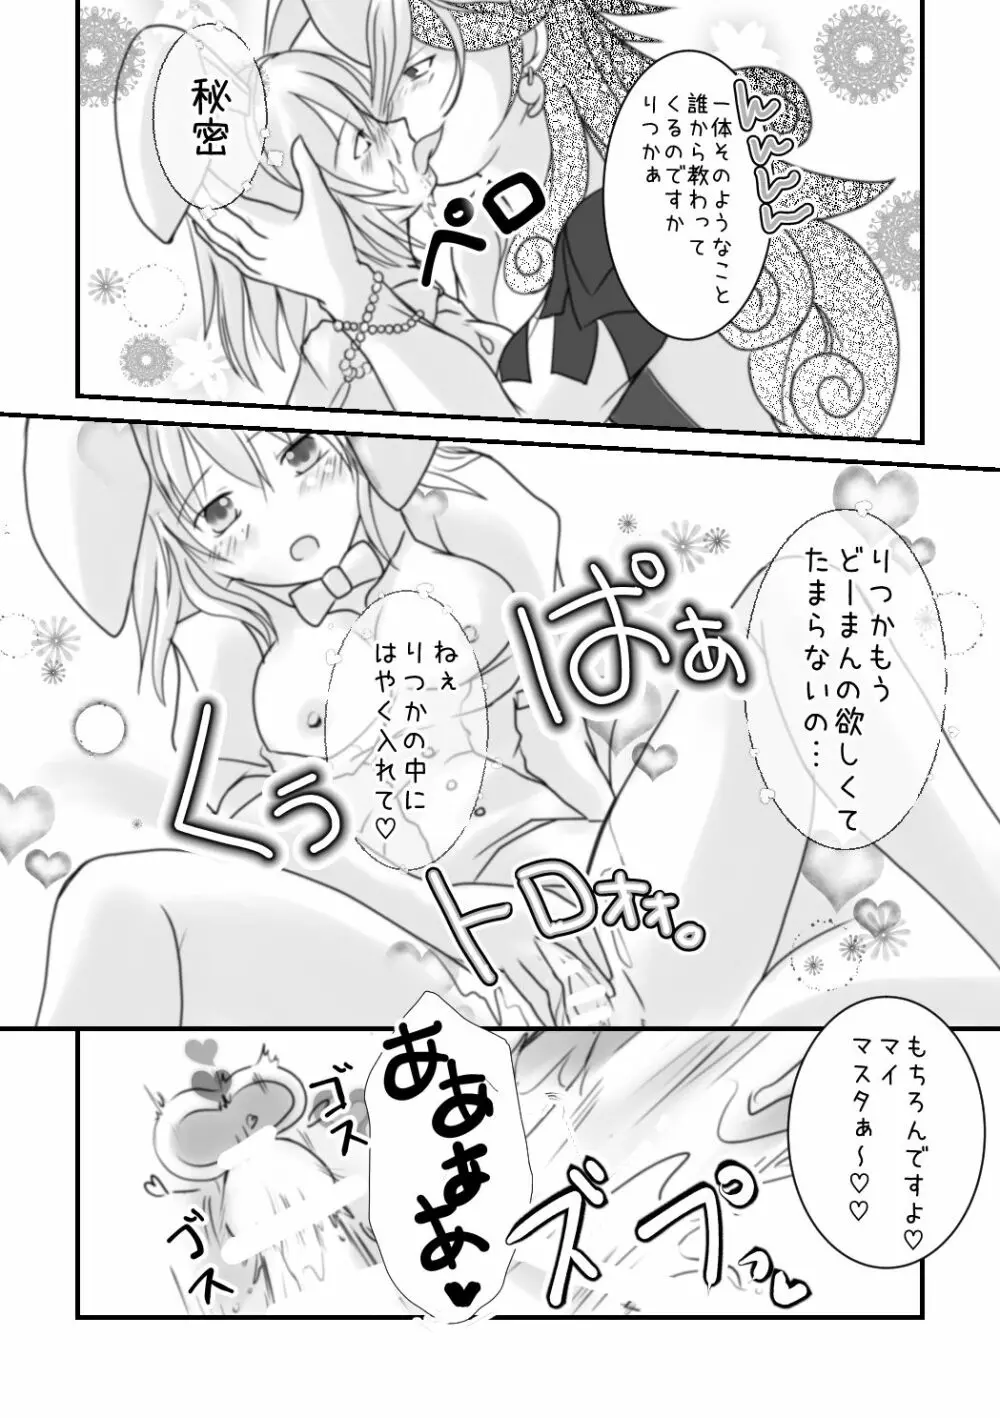 ] Rin guda ♀ rakugaki guda yuru manga(Fate/Grand Order] - page4